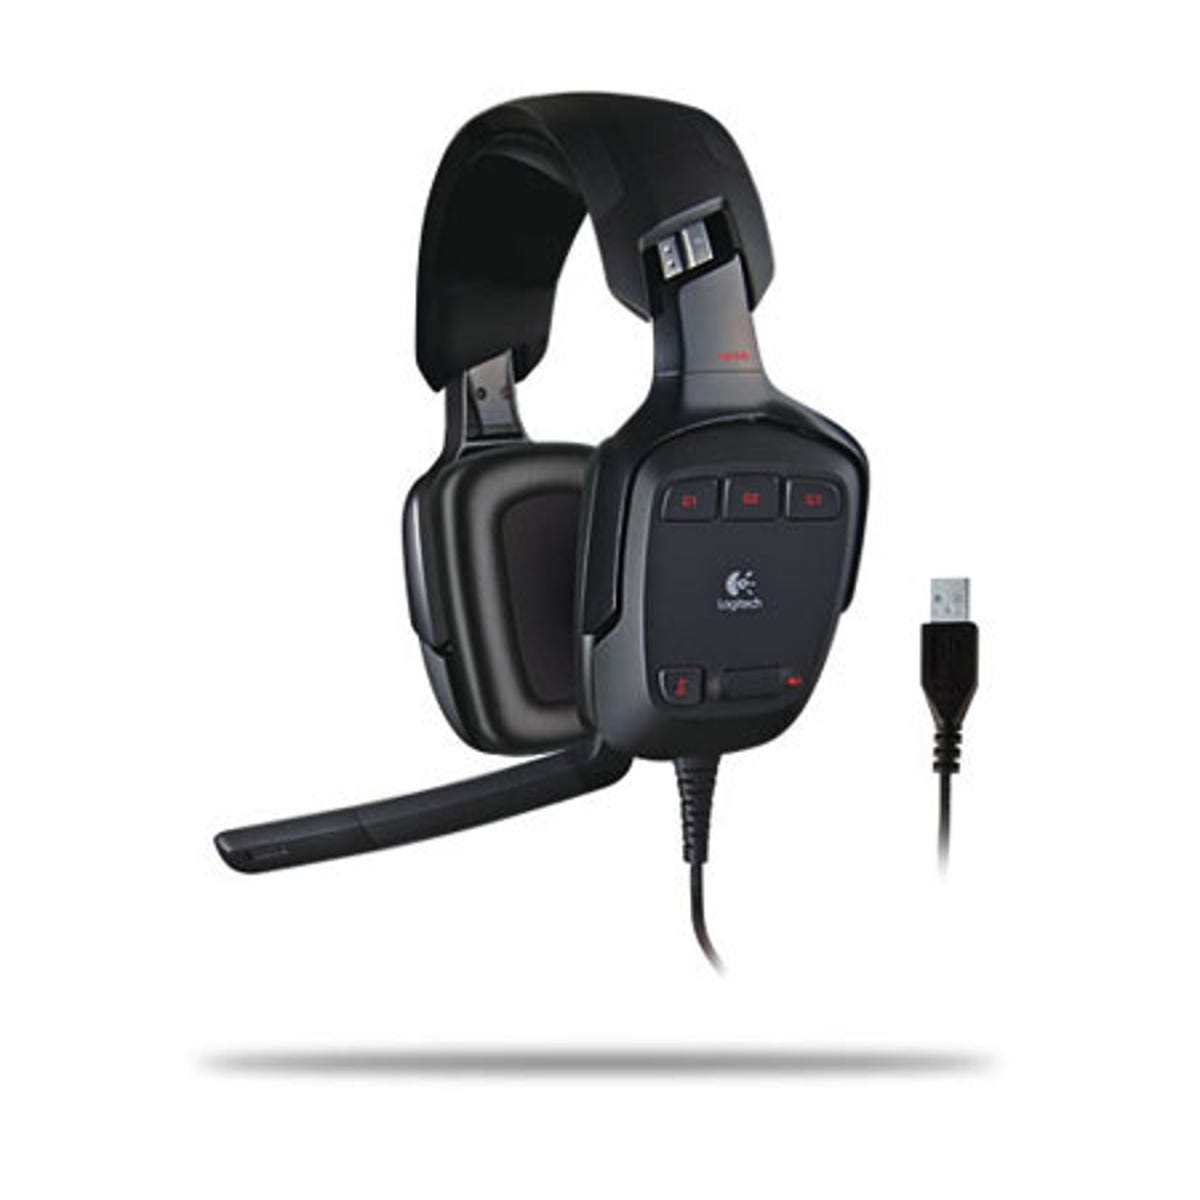 Logitech Surround Sound review: Logitech G35 Sound Headset CNET